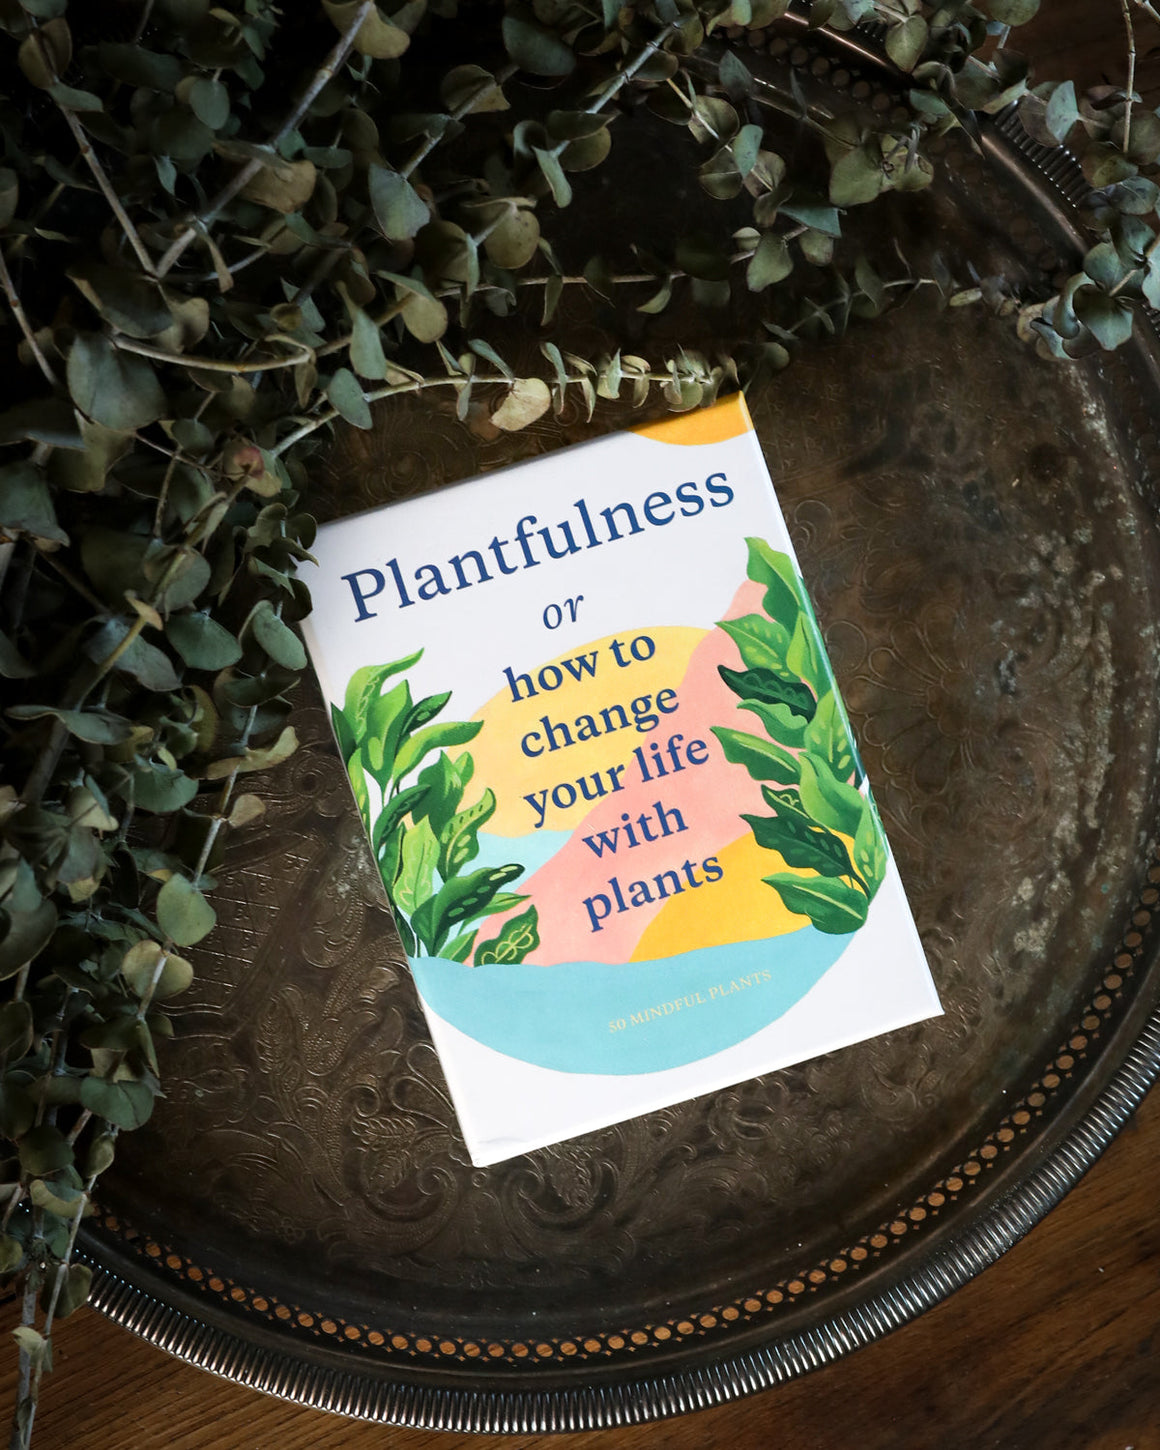 Plantfulness-Change Your Life